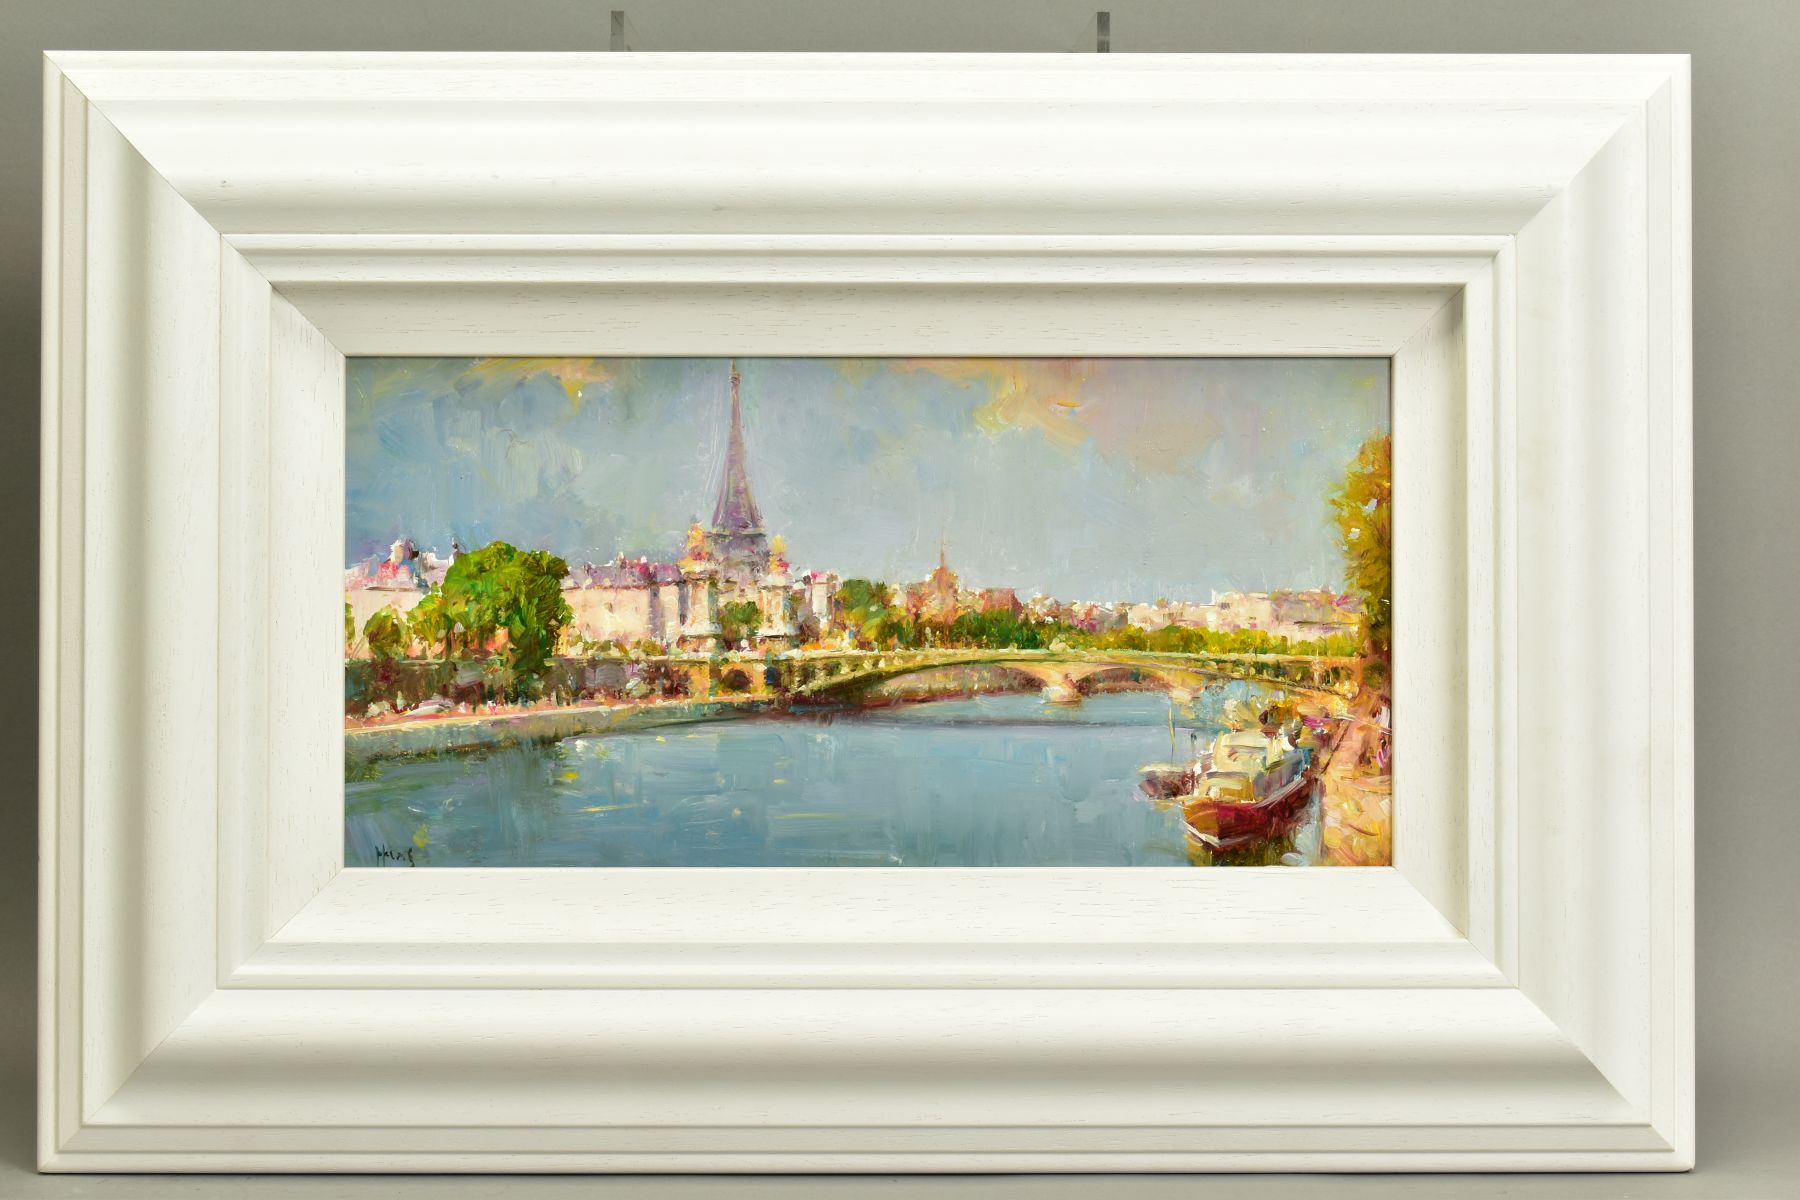 HELIOS GISBERT (SPANISH 1958), 'Parisian Summer', an impressionist view of Paris, signed bottom